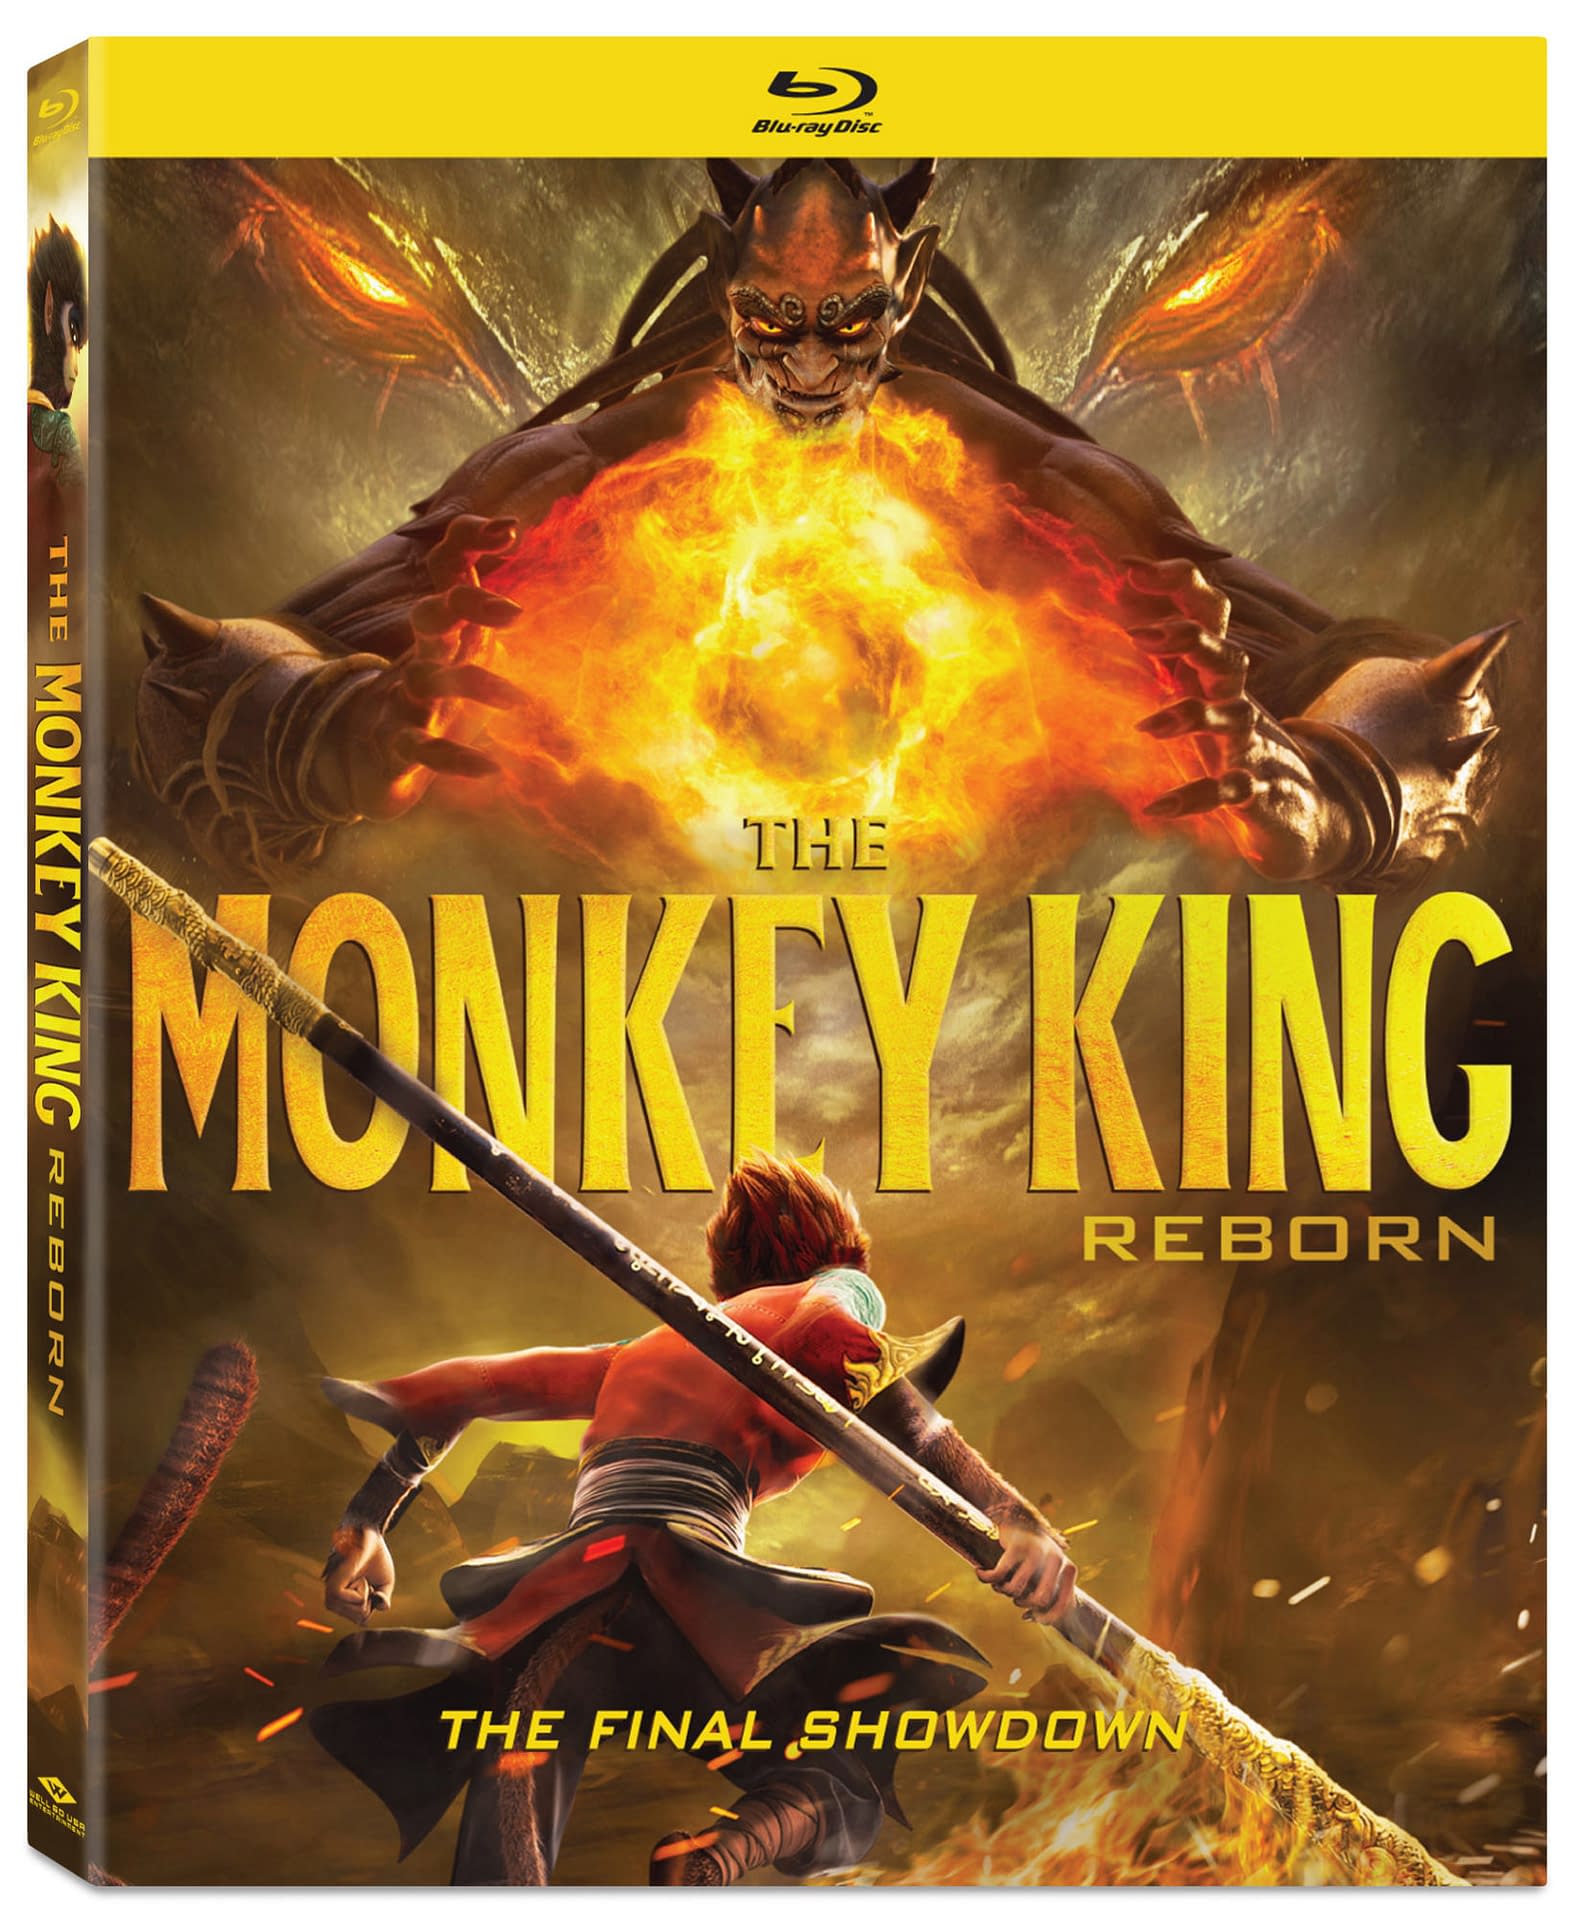 Monkey King Reborn Blu-Ray Review: A Slam-Bang Anime Buddhist Parable